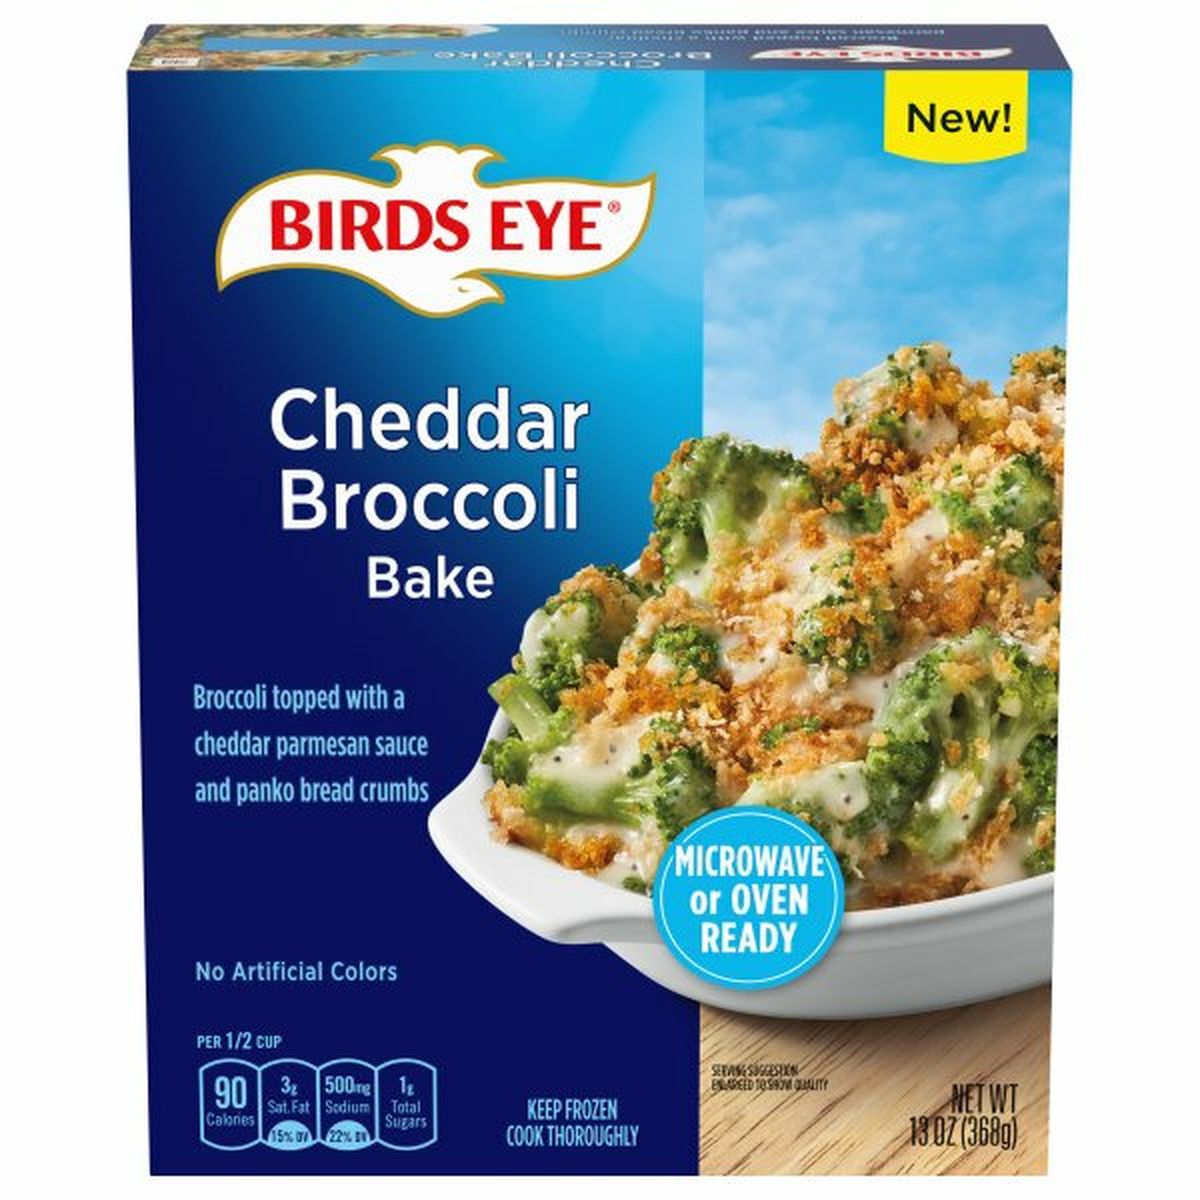 Calories in Birds Eye Broccoli Bake, Cheddar